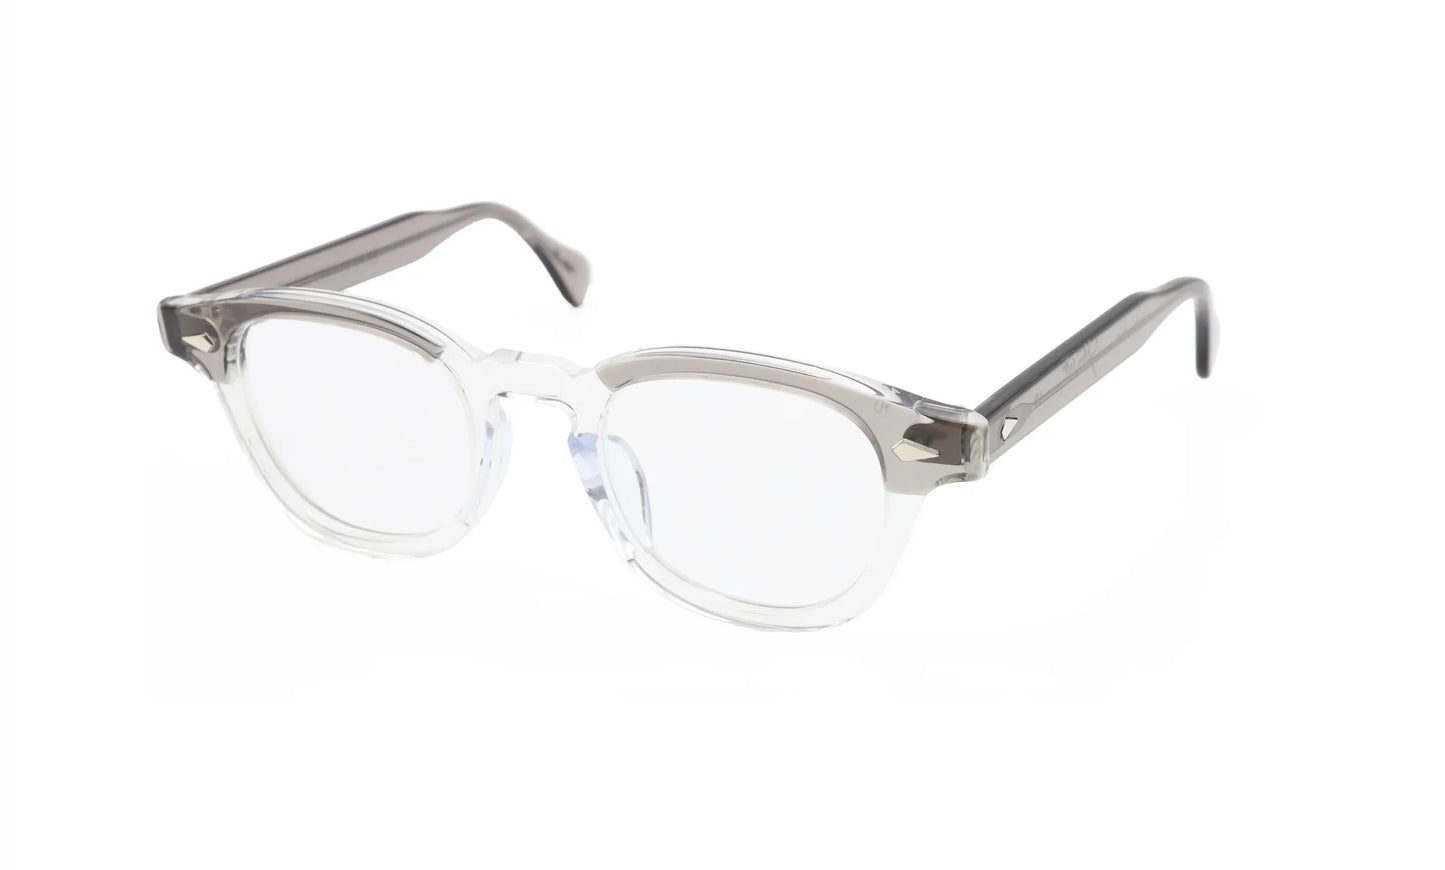 JULIUS TART OPTICAL AR Eyeglass Frame Grey Crystal Brow